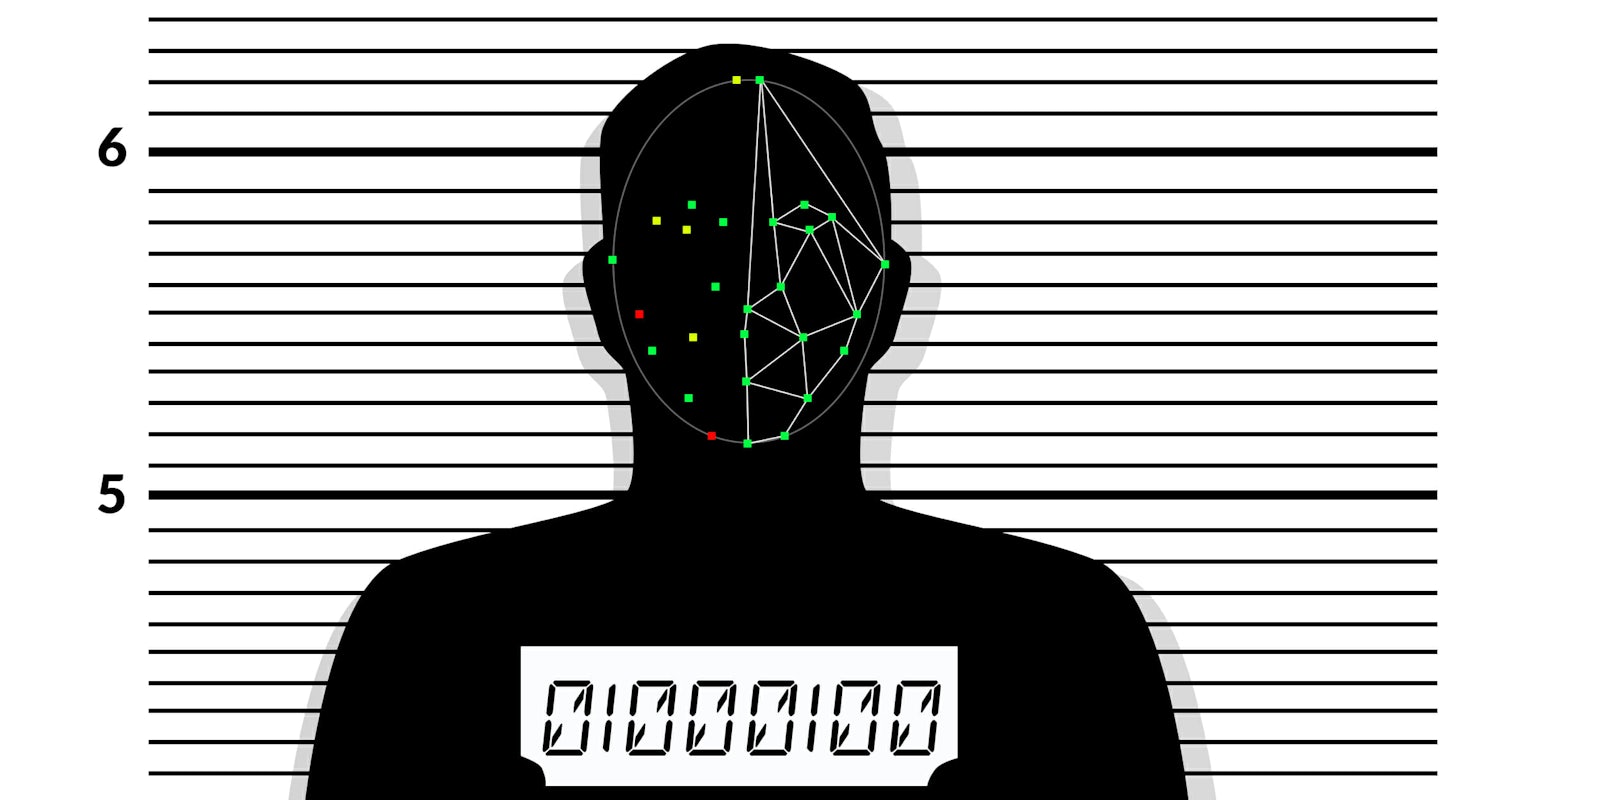 facial recognition software running during mugshot